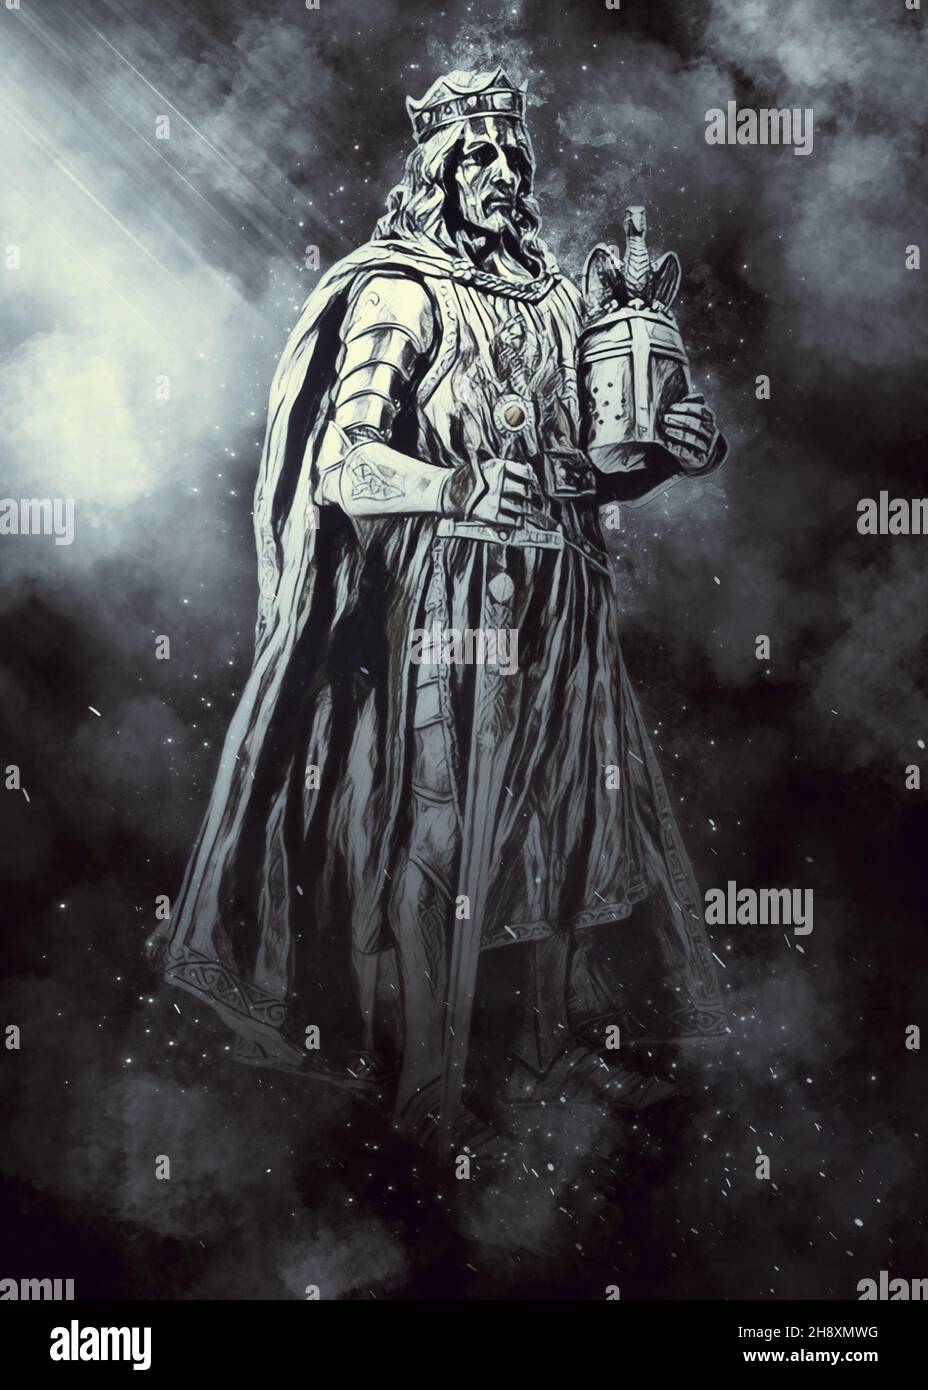 King Arthur Digital Illustration Stock Photo